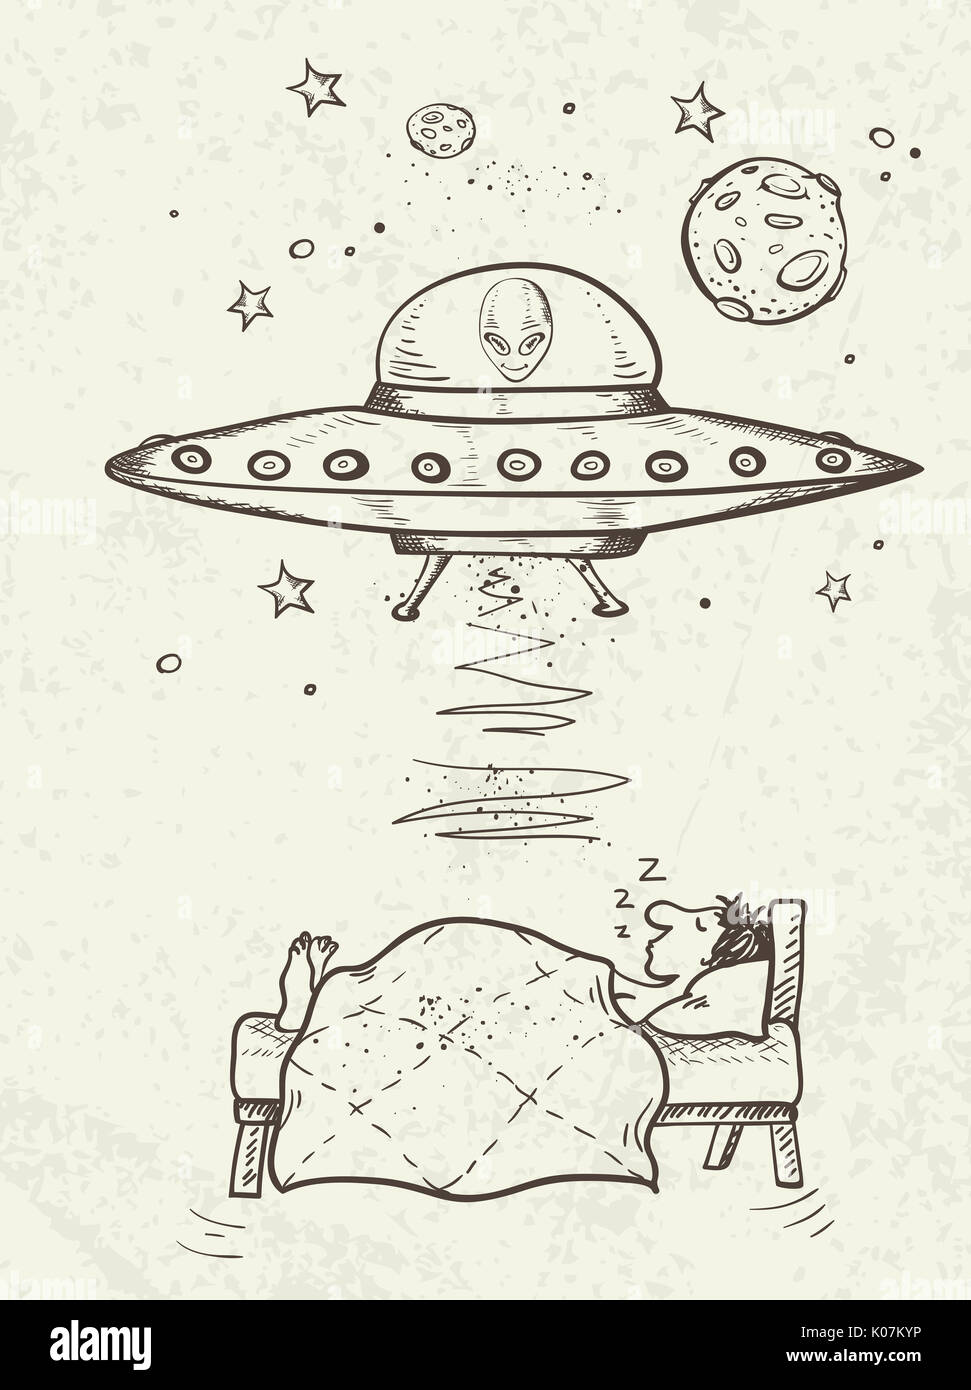 https://c8.alamy.com/comp/K07KYP/fantastic-doodle-background-with-ufo-abducts-a-sleeping-man-K07KYP.jpg